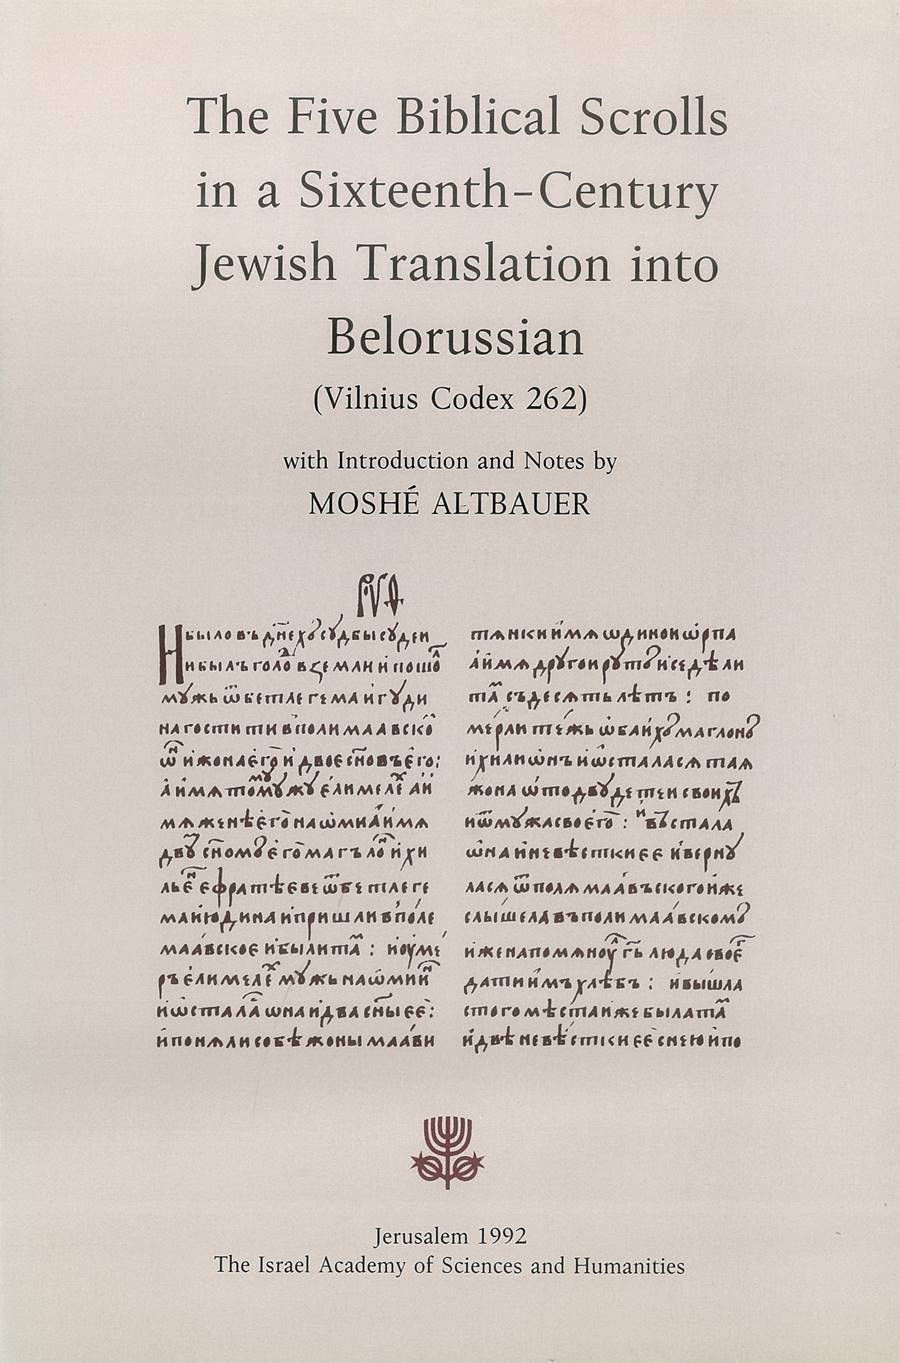 The Five Biblical Scrolls in a Sixteenth-Century Jewish Translation into Belorussian (Vilnius Codex 262)